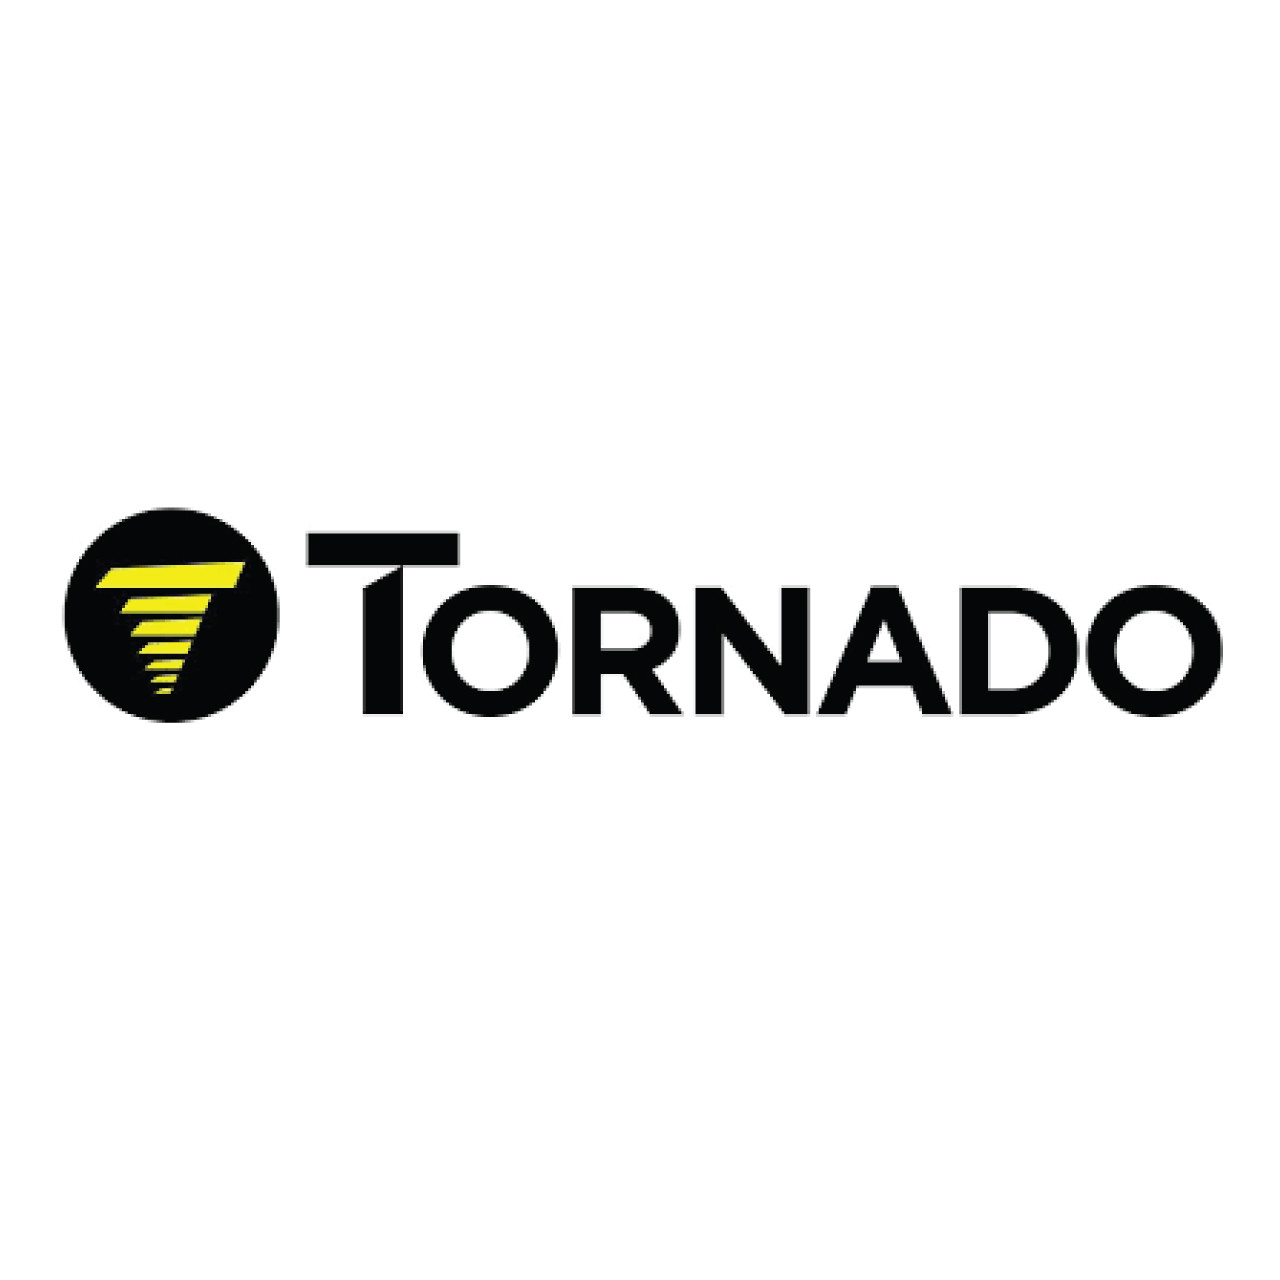 00-0516-0013, Tornado 00-0516-0013, Tornado SCREW, M5 X 16 PAN POZI M/C A2, Tornado parts